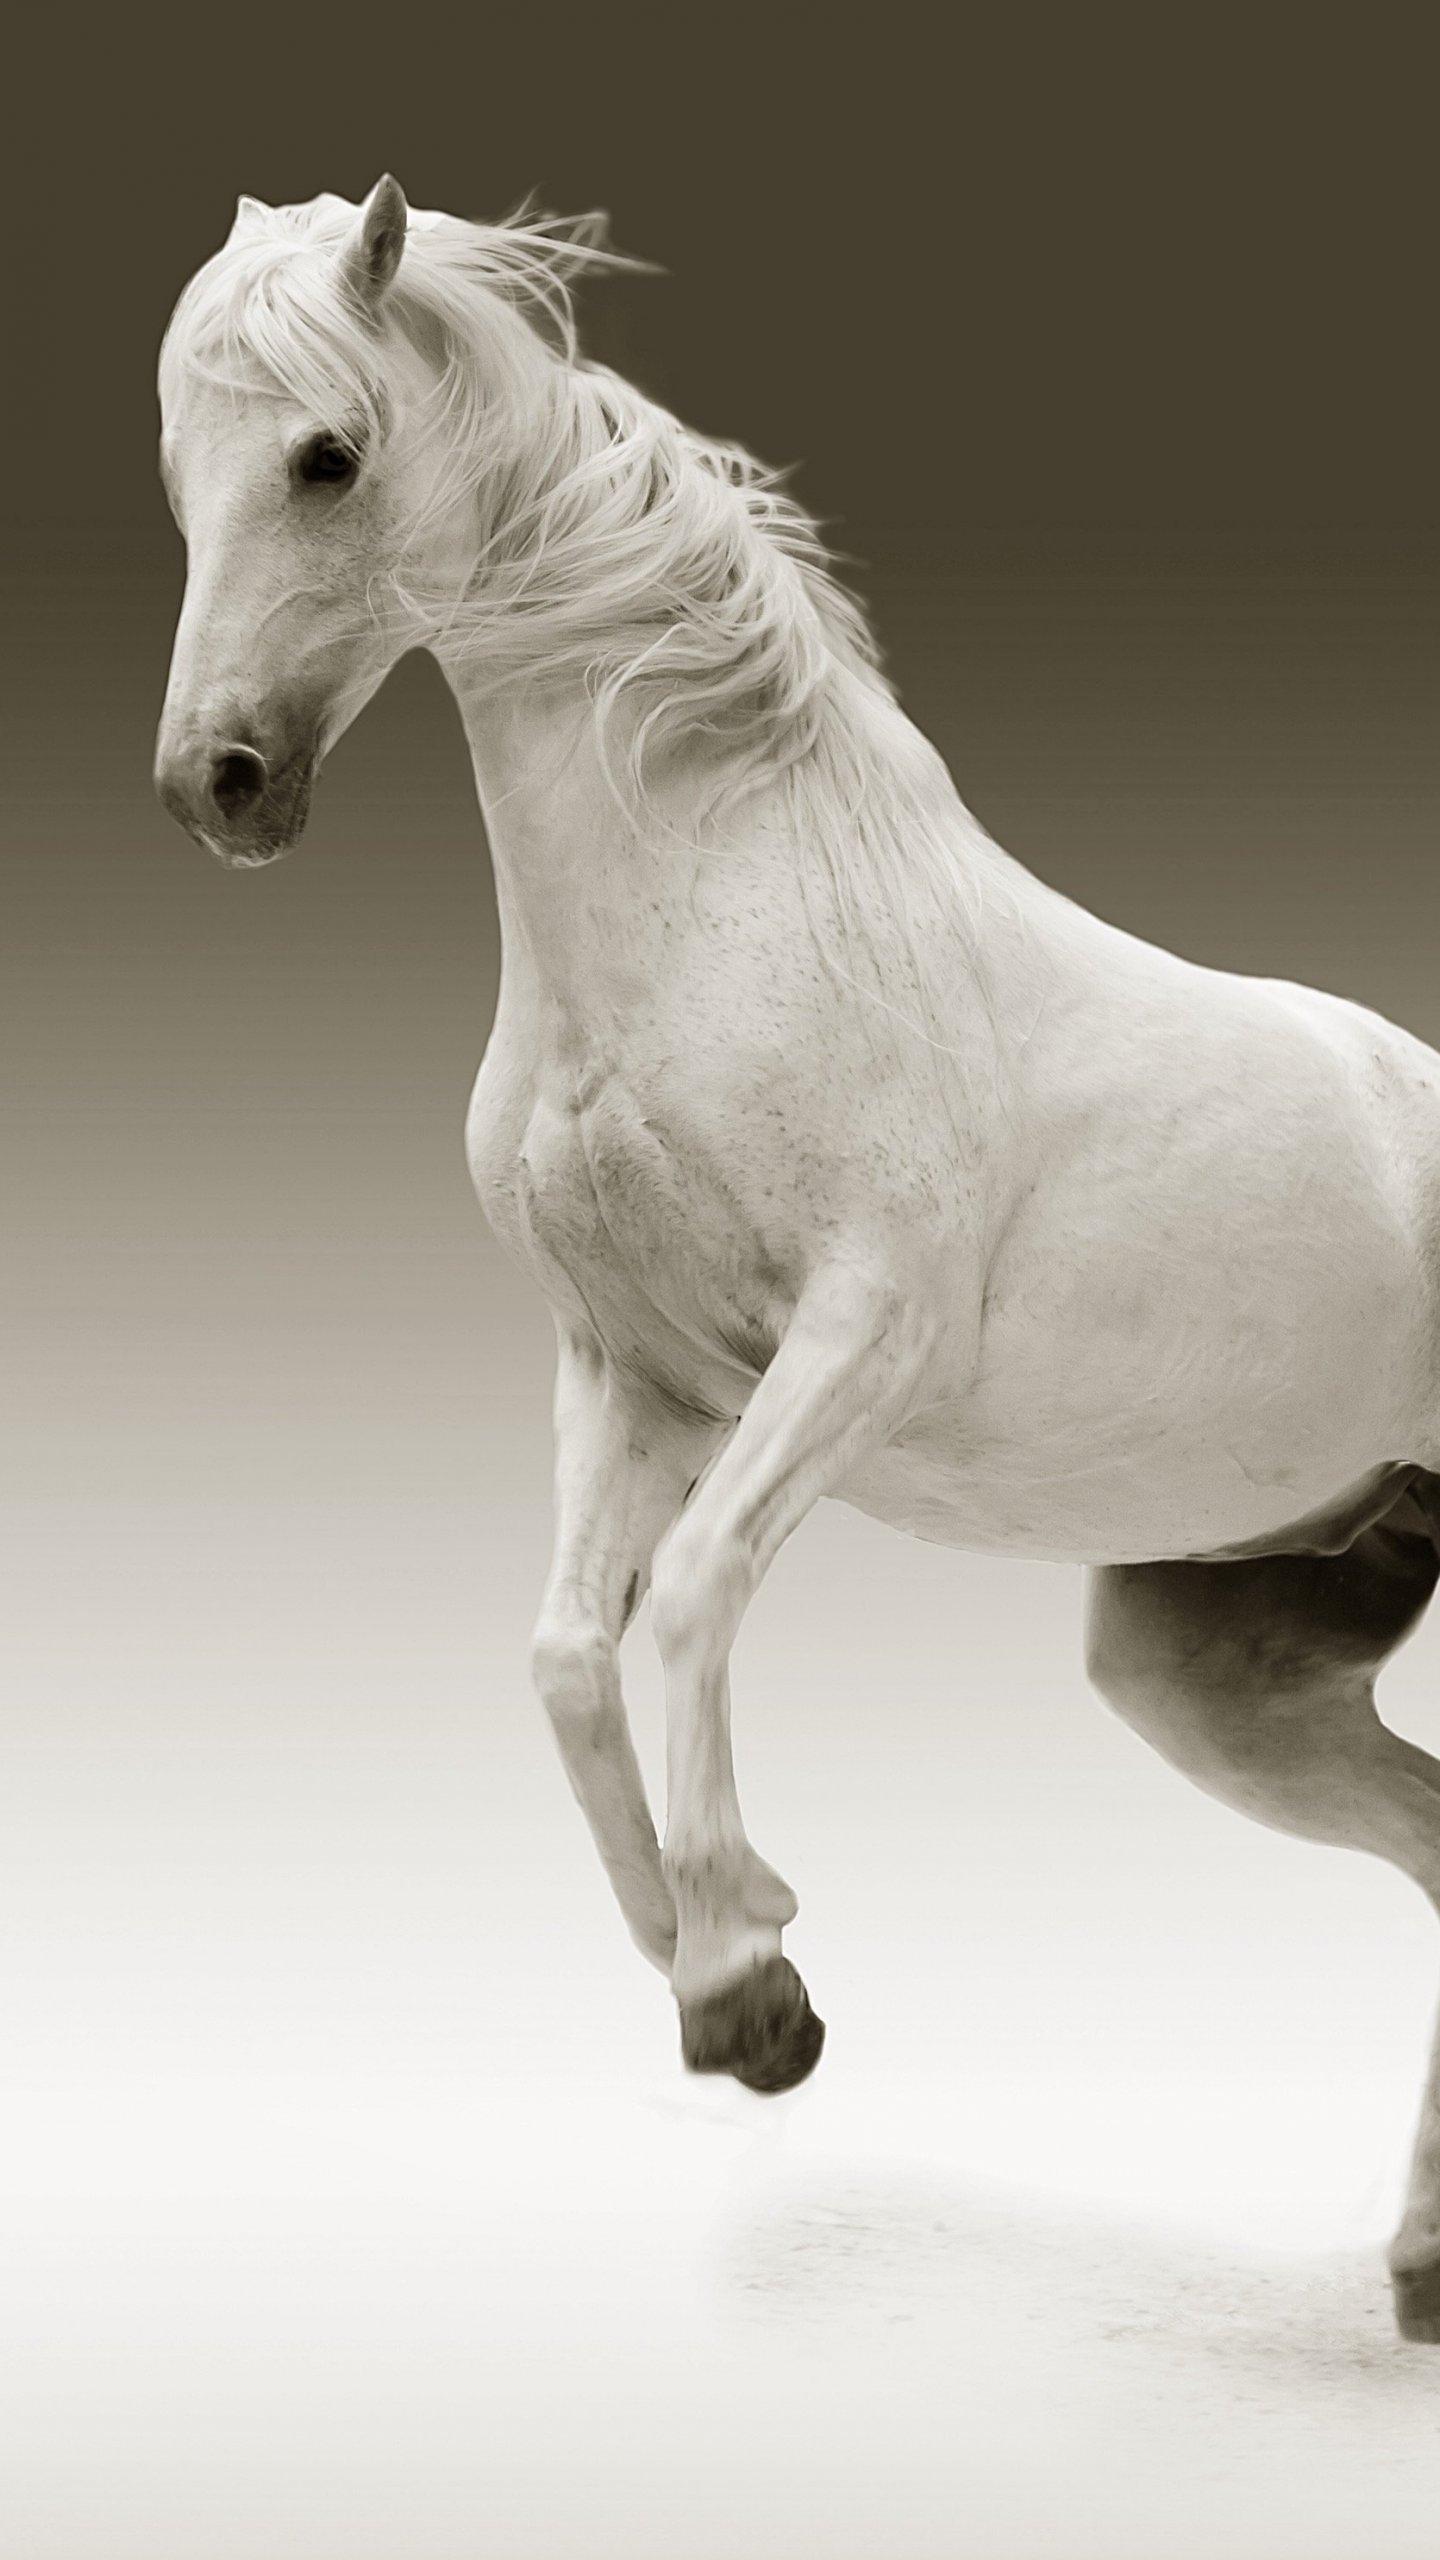 White Horse Wallpaper, Android & Desktop Background